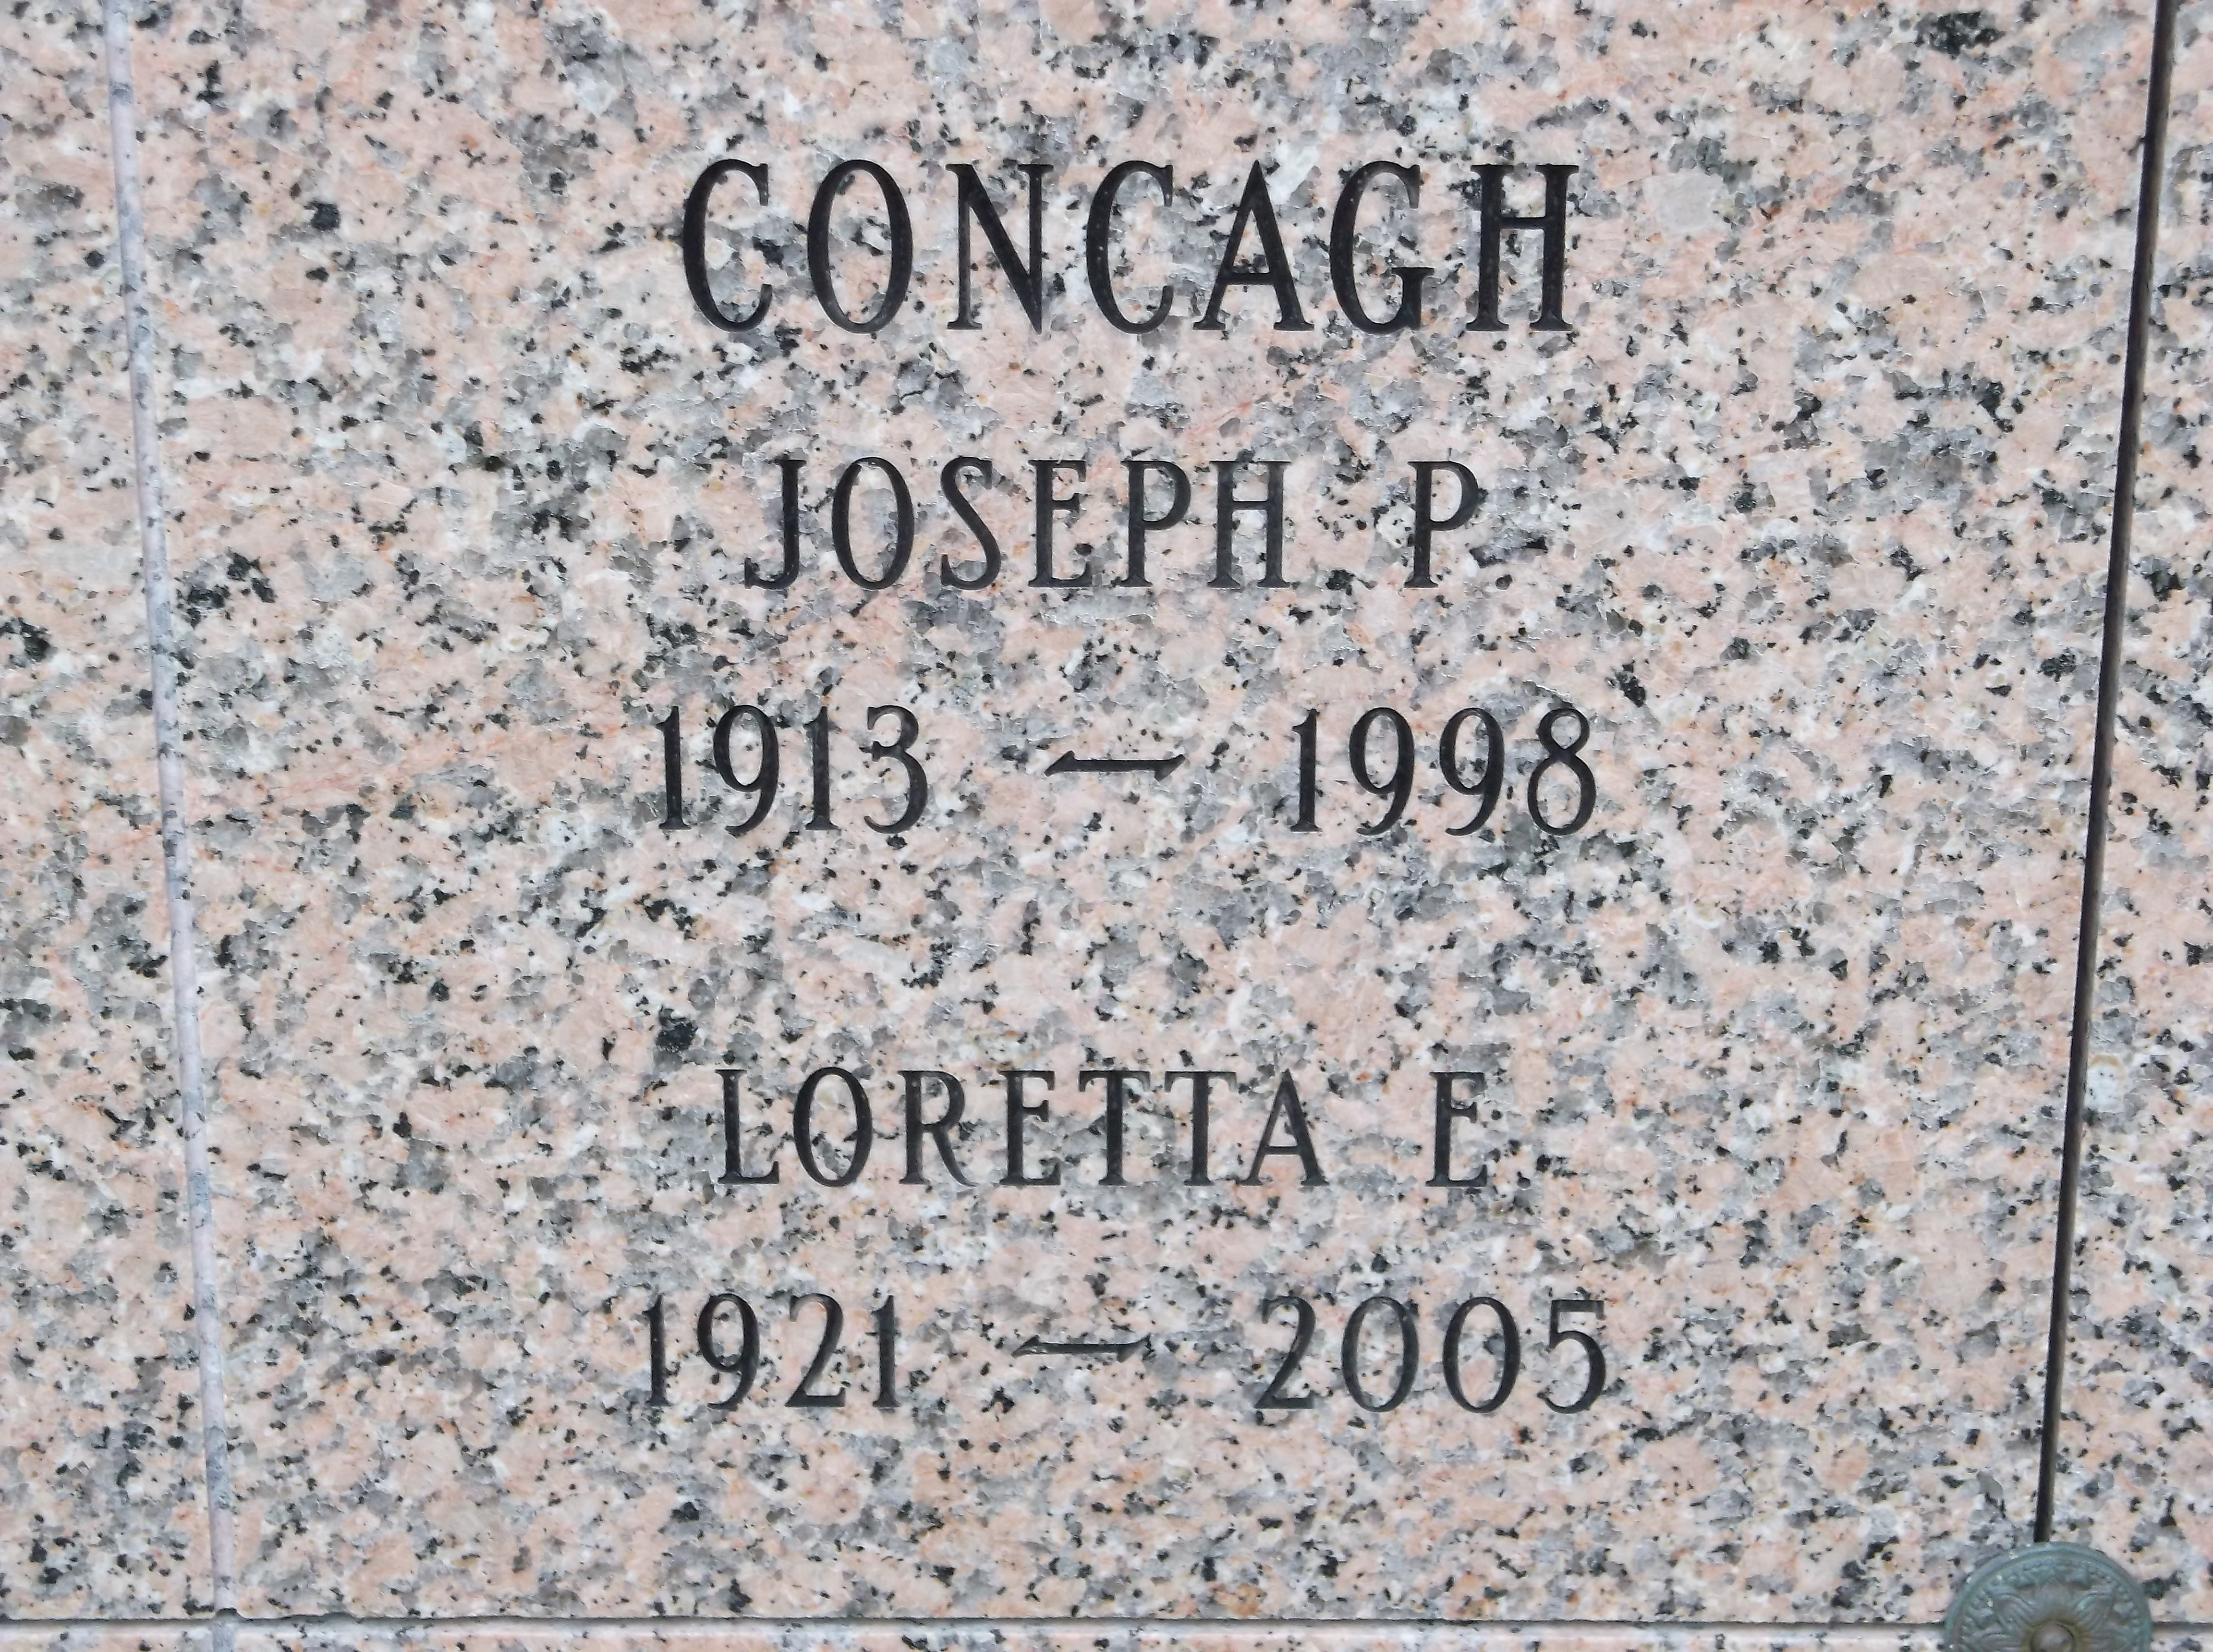 Joseph P Concagh